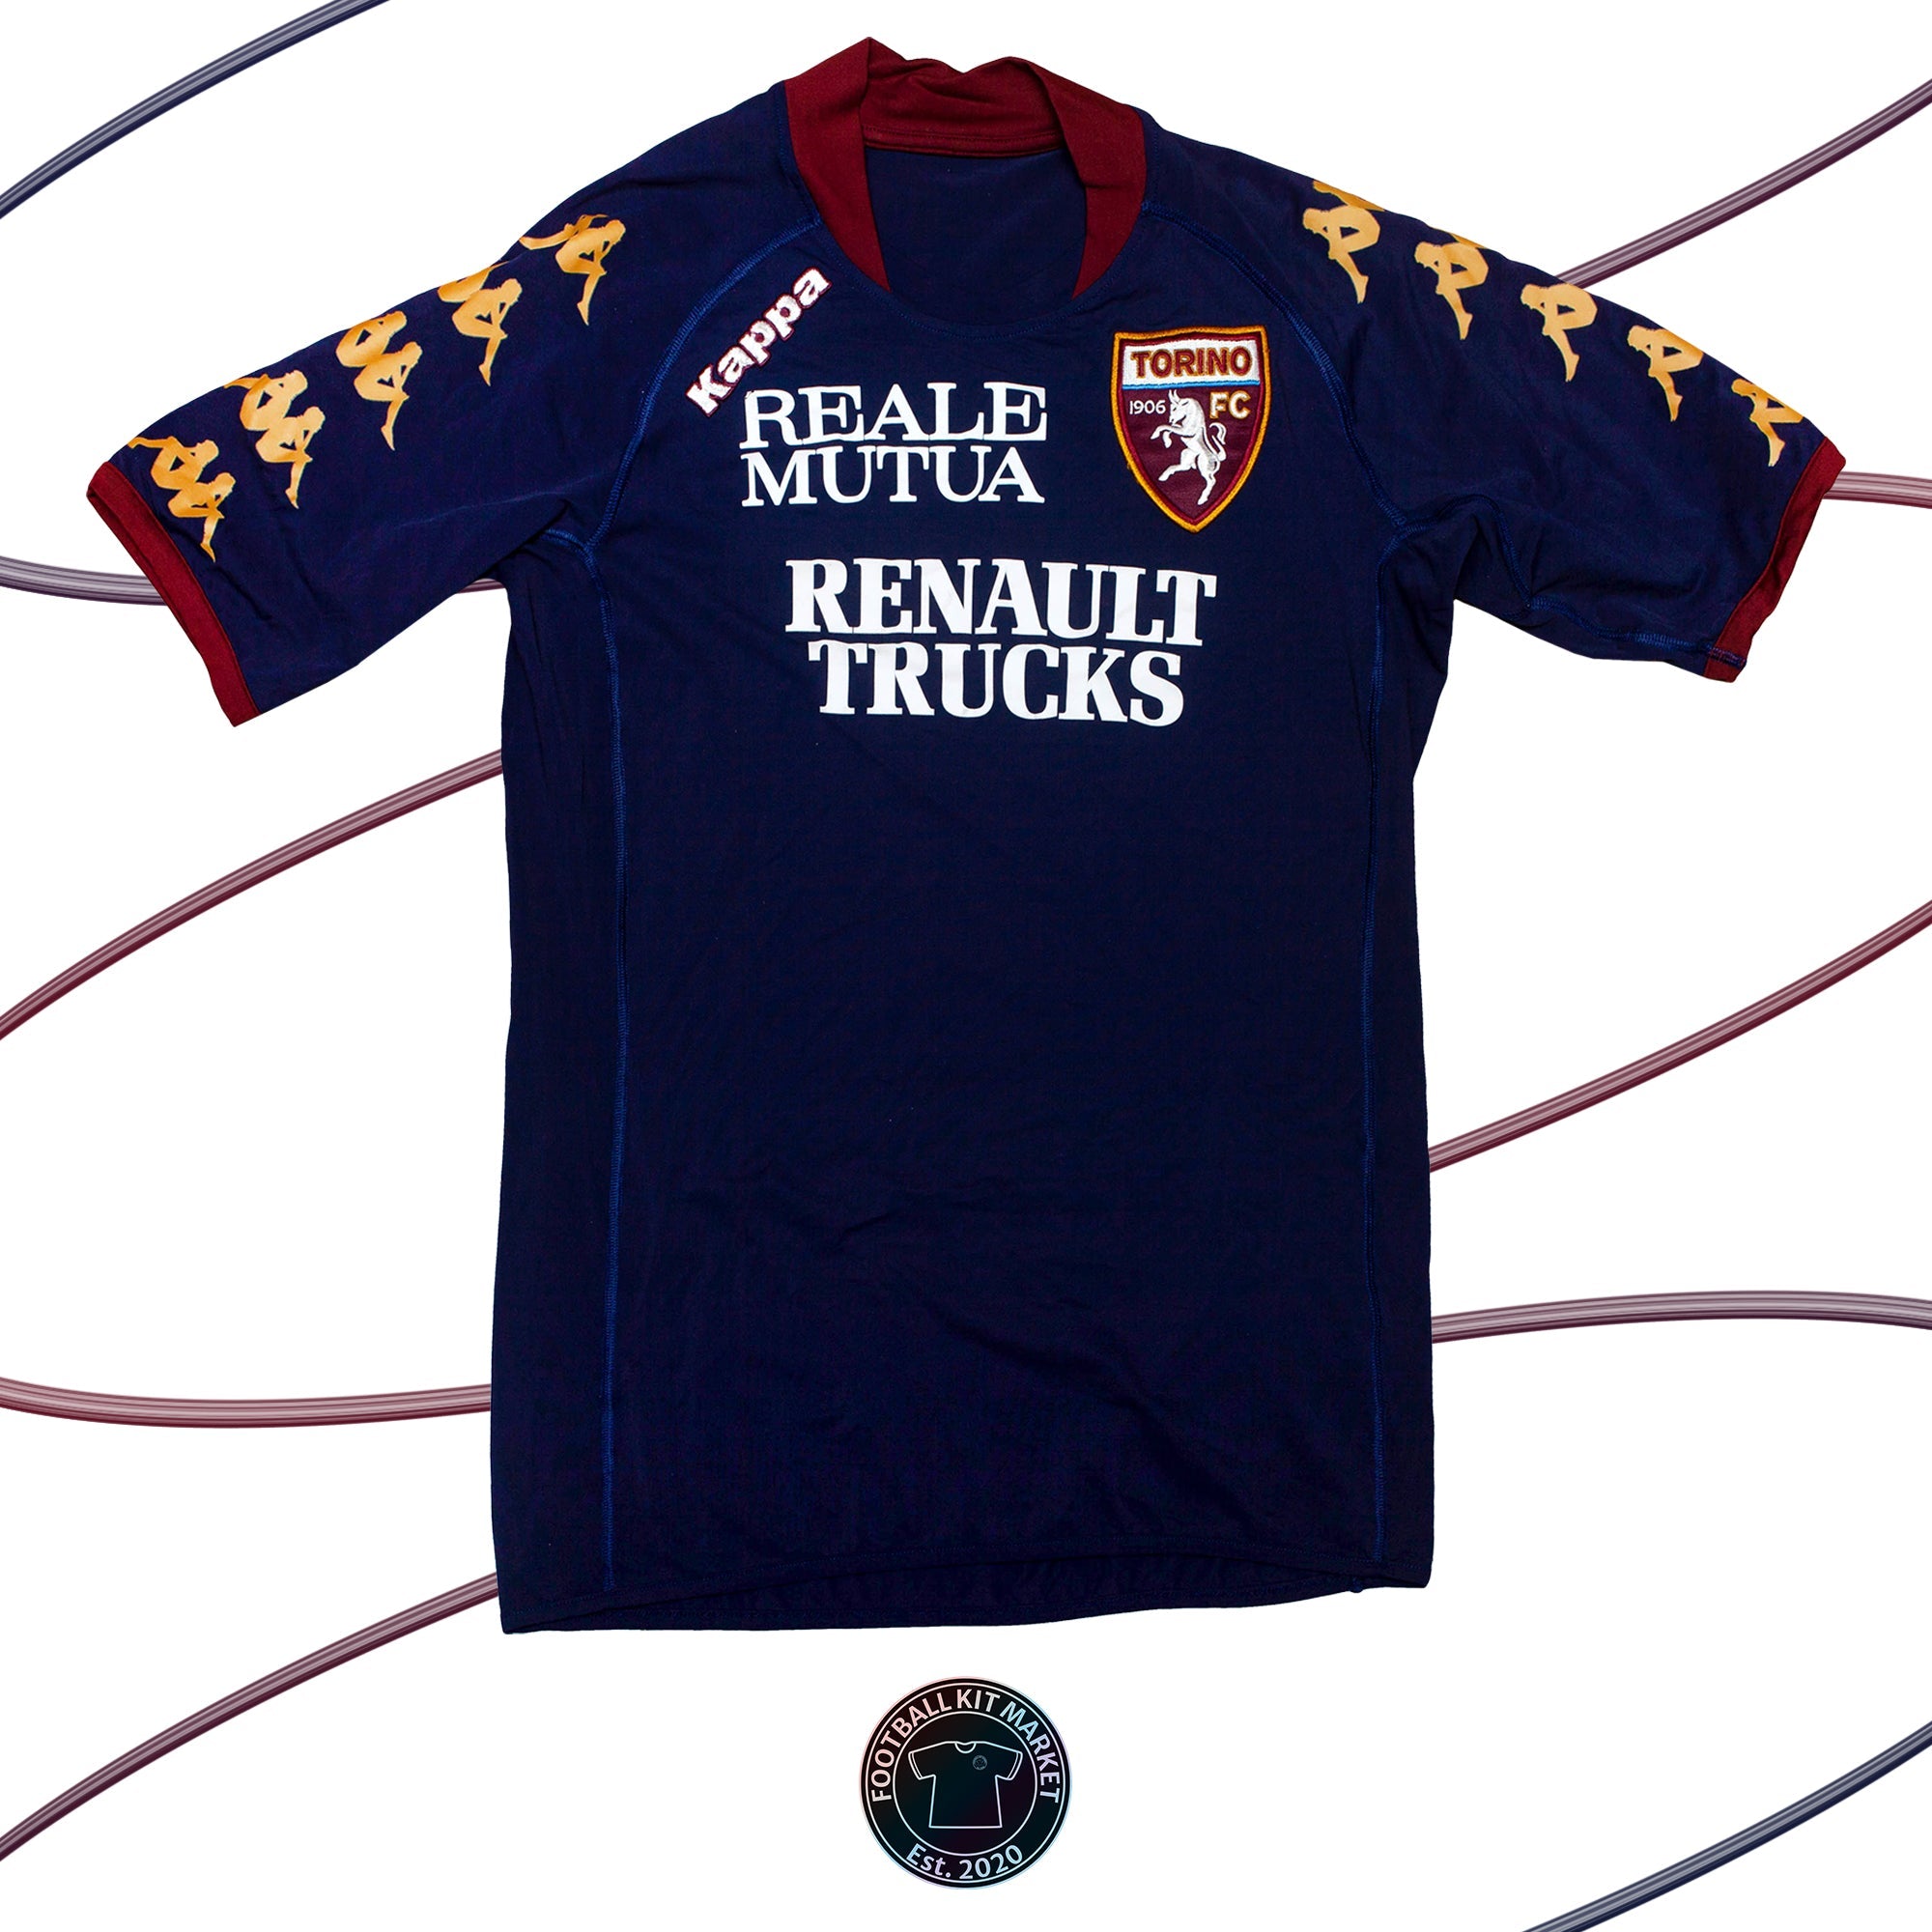 Genuine TORINO 3rd Shirt (2008-2009) - KAPPA (M) - Product Image from Football Kit Market